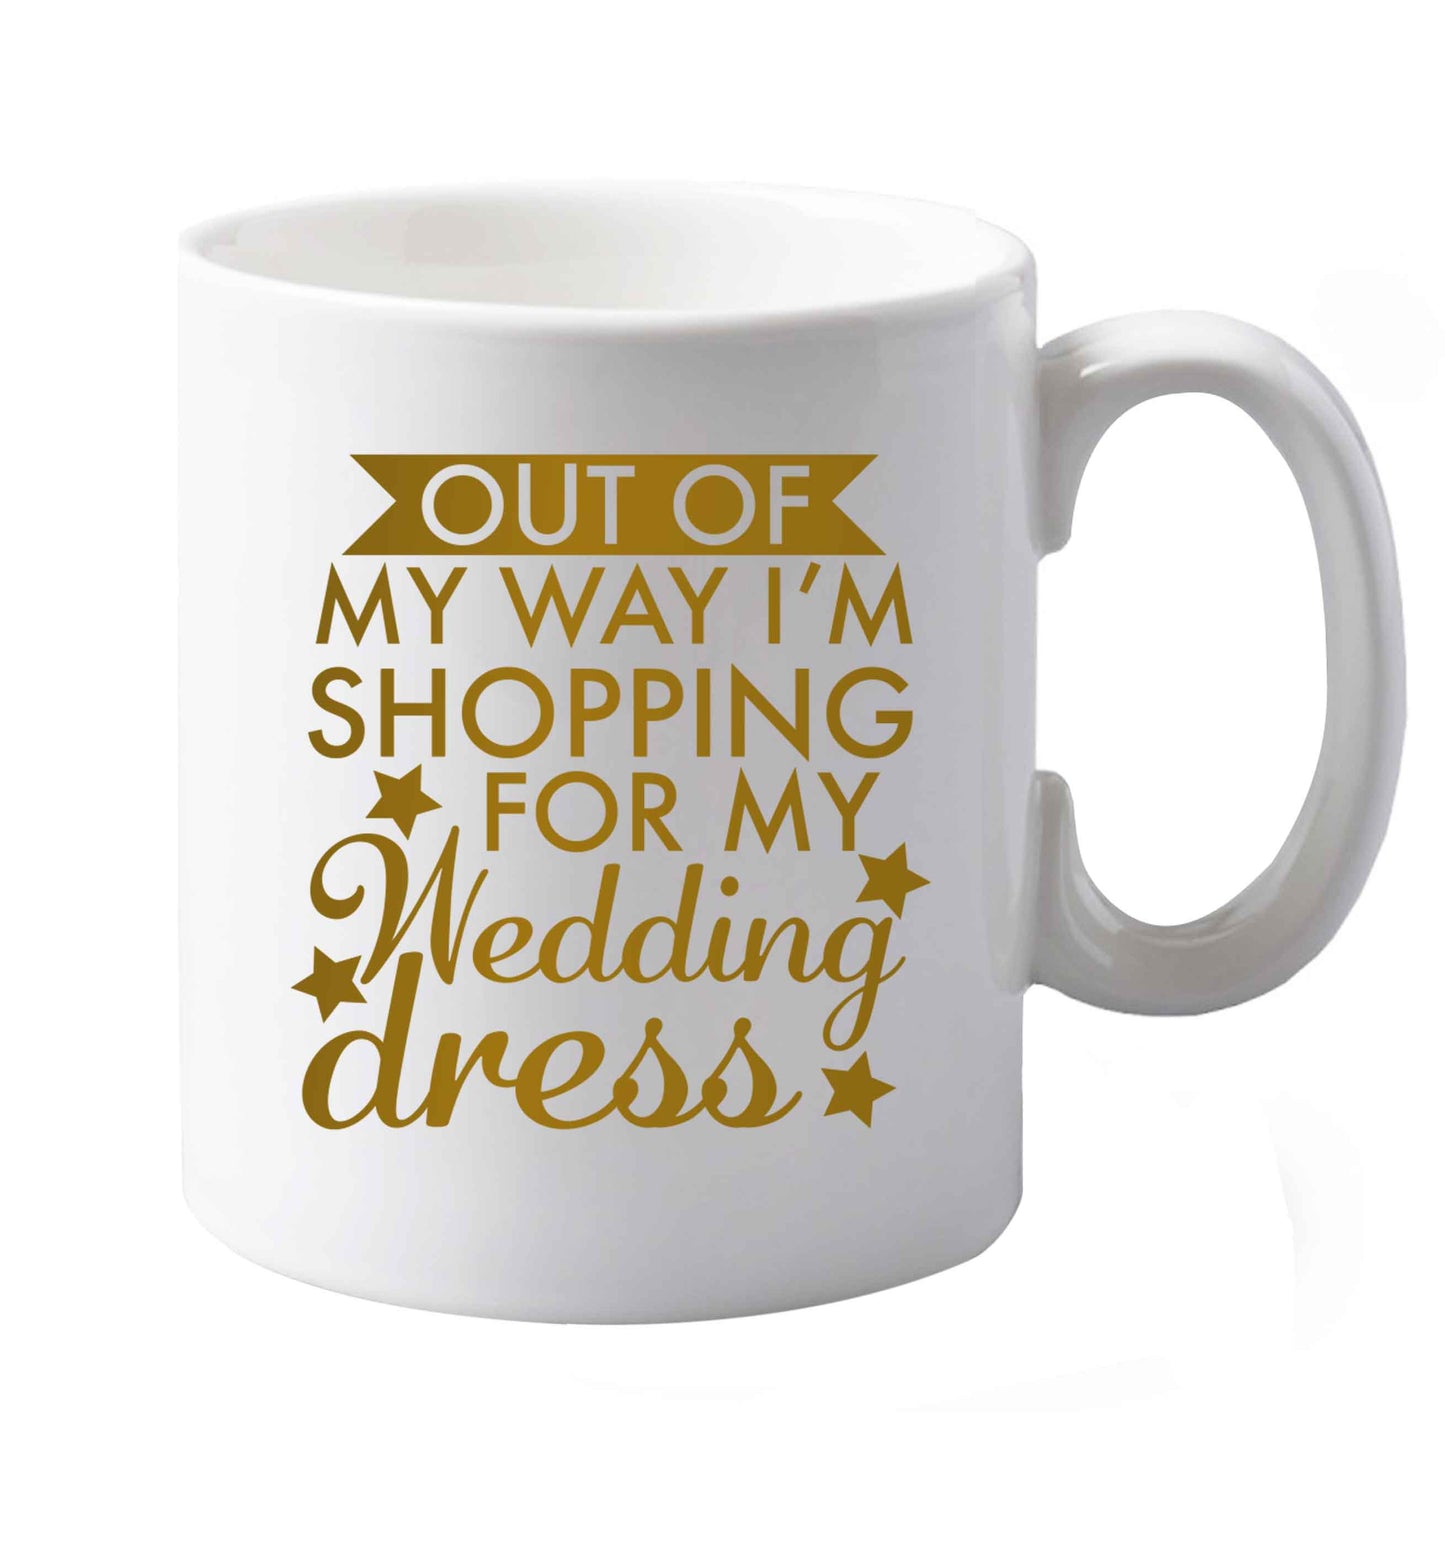 10 oz Out of my way I'm shopping for my wedding dress   ceramic mug both sides